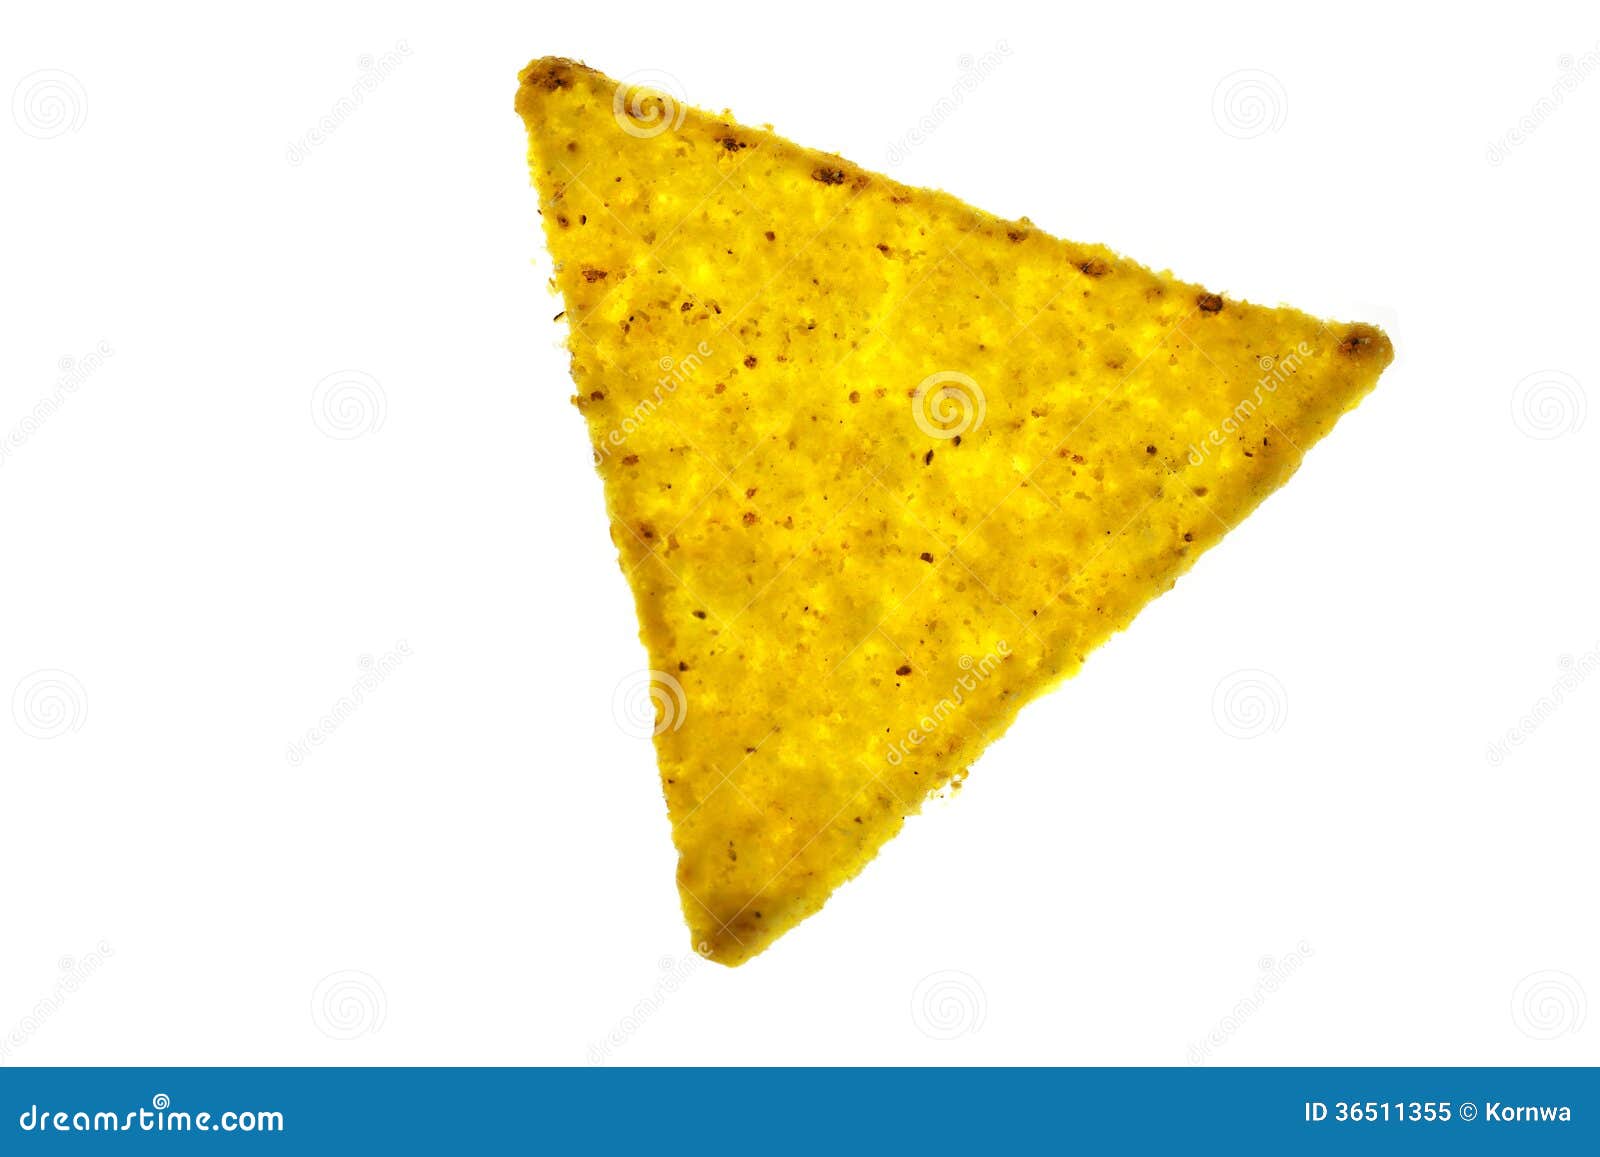 tortilla chip clipart - photo #31